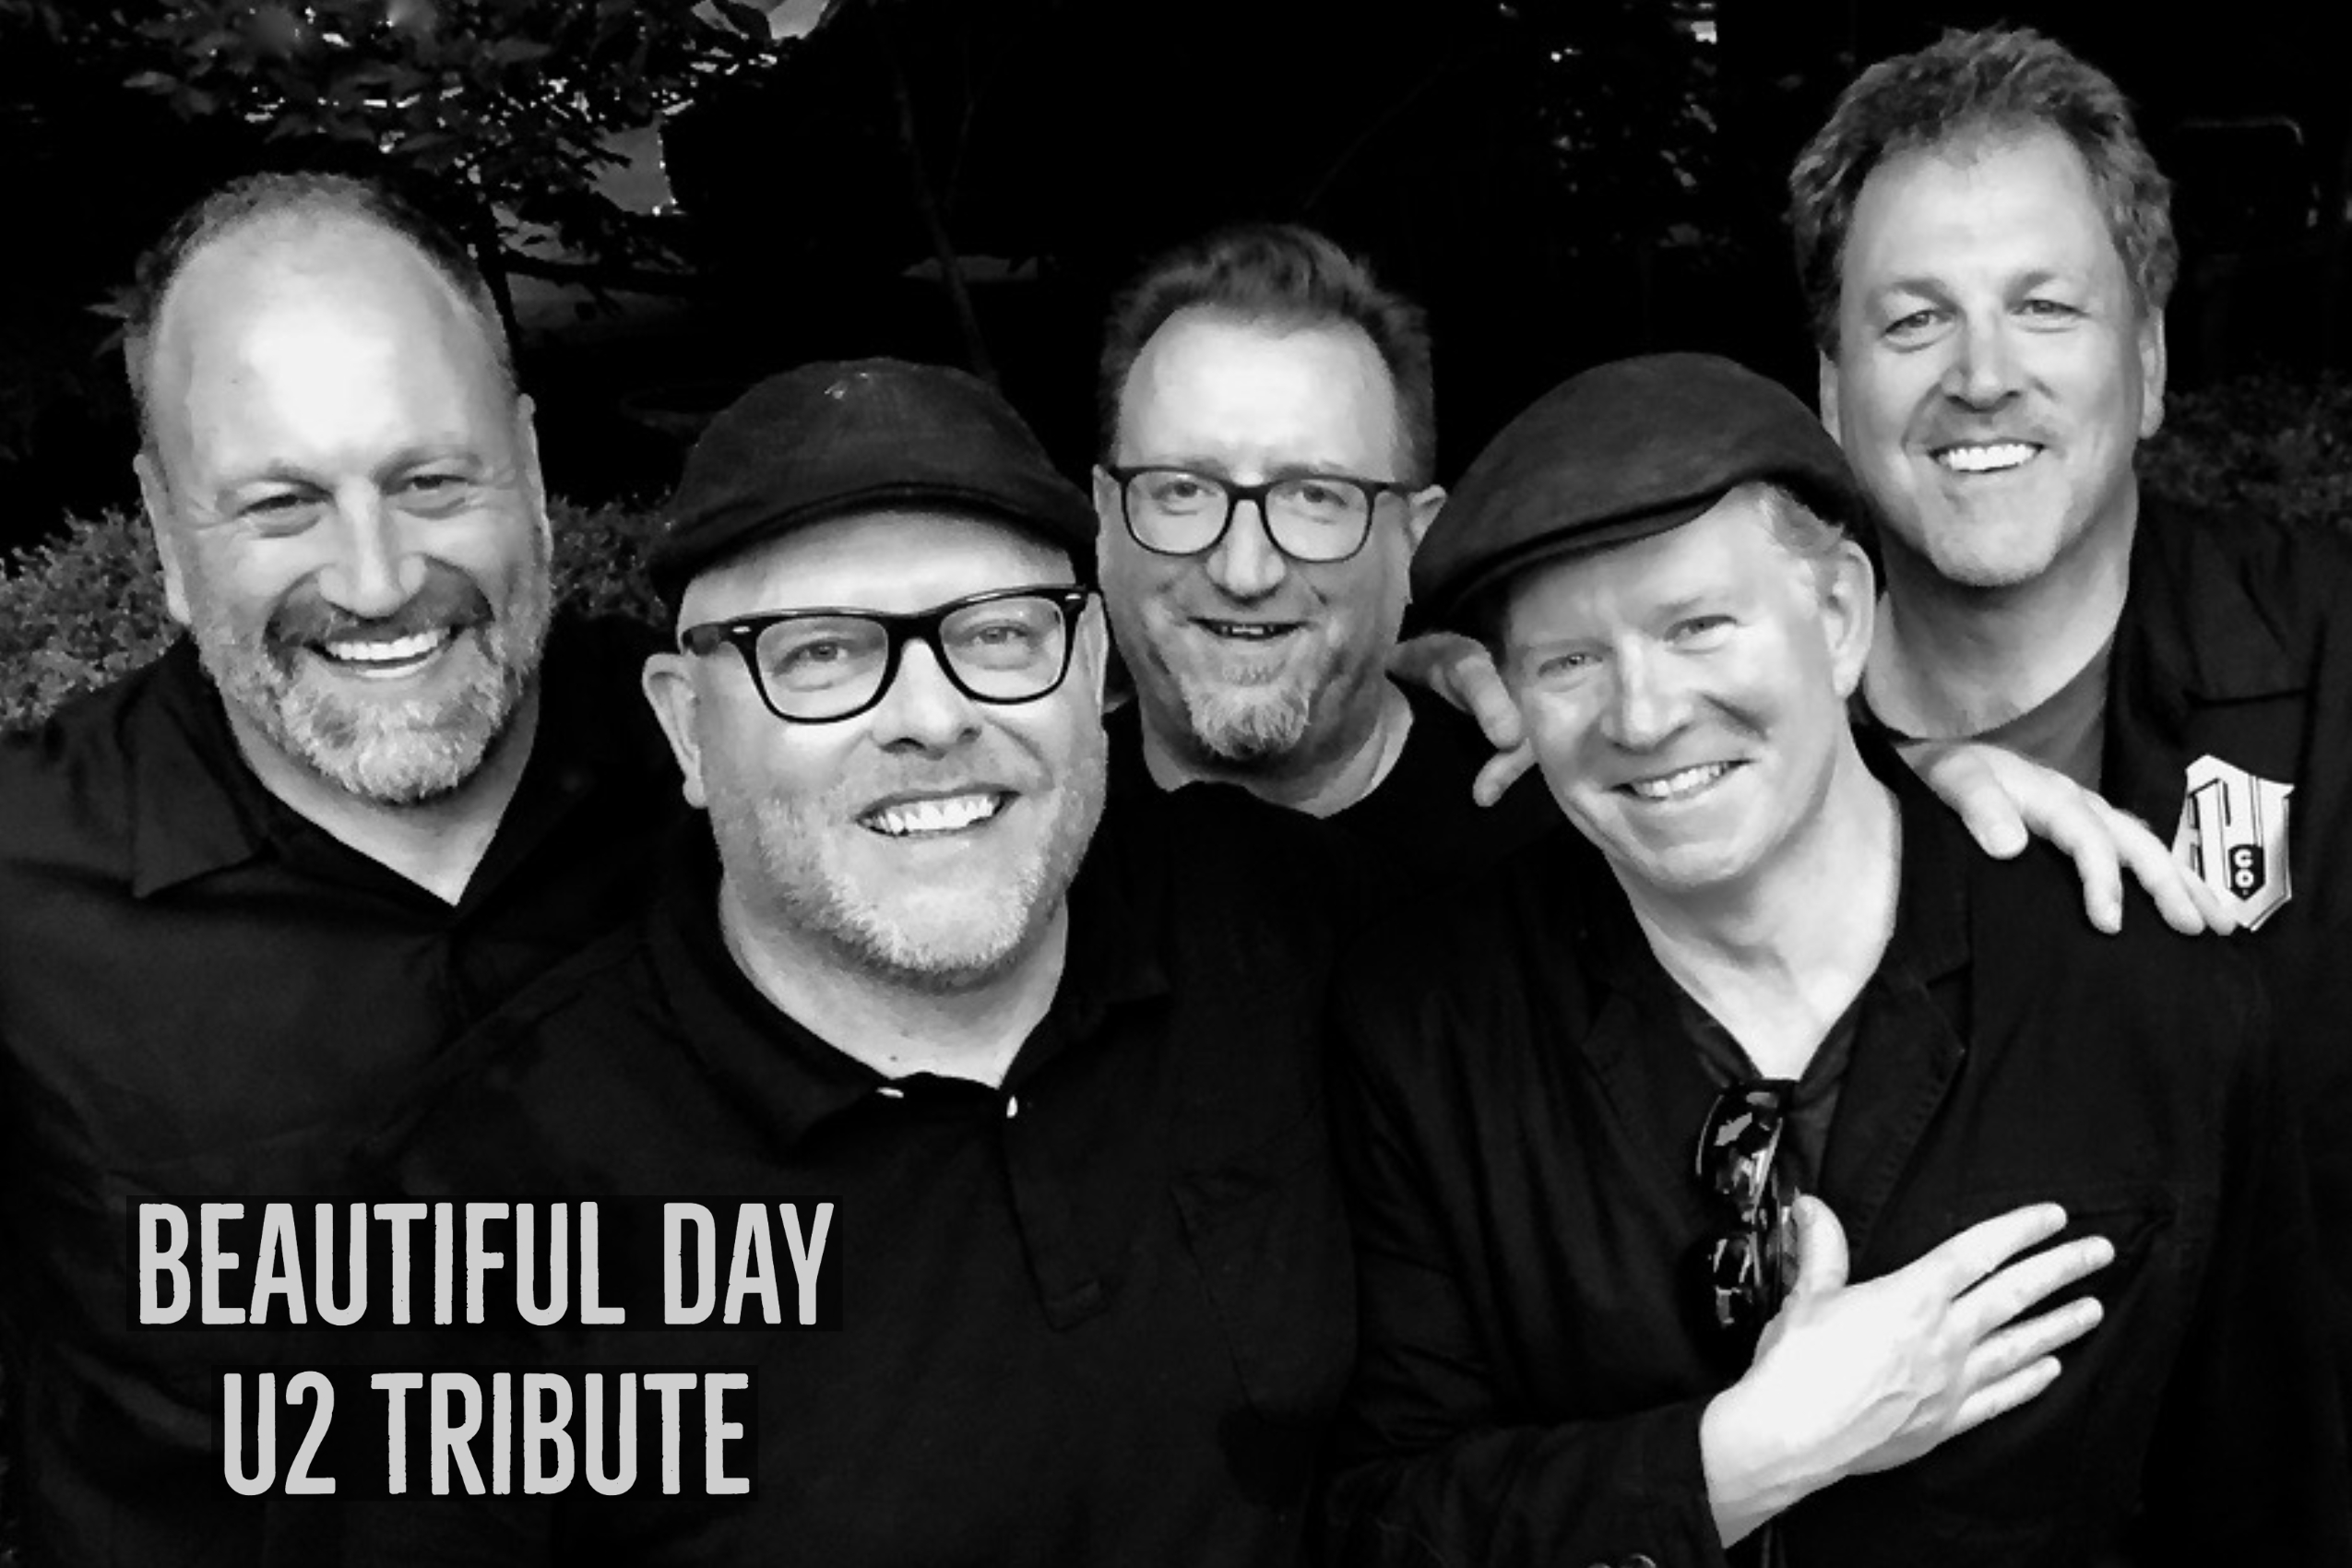 Beautiful Day U2 Tribute